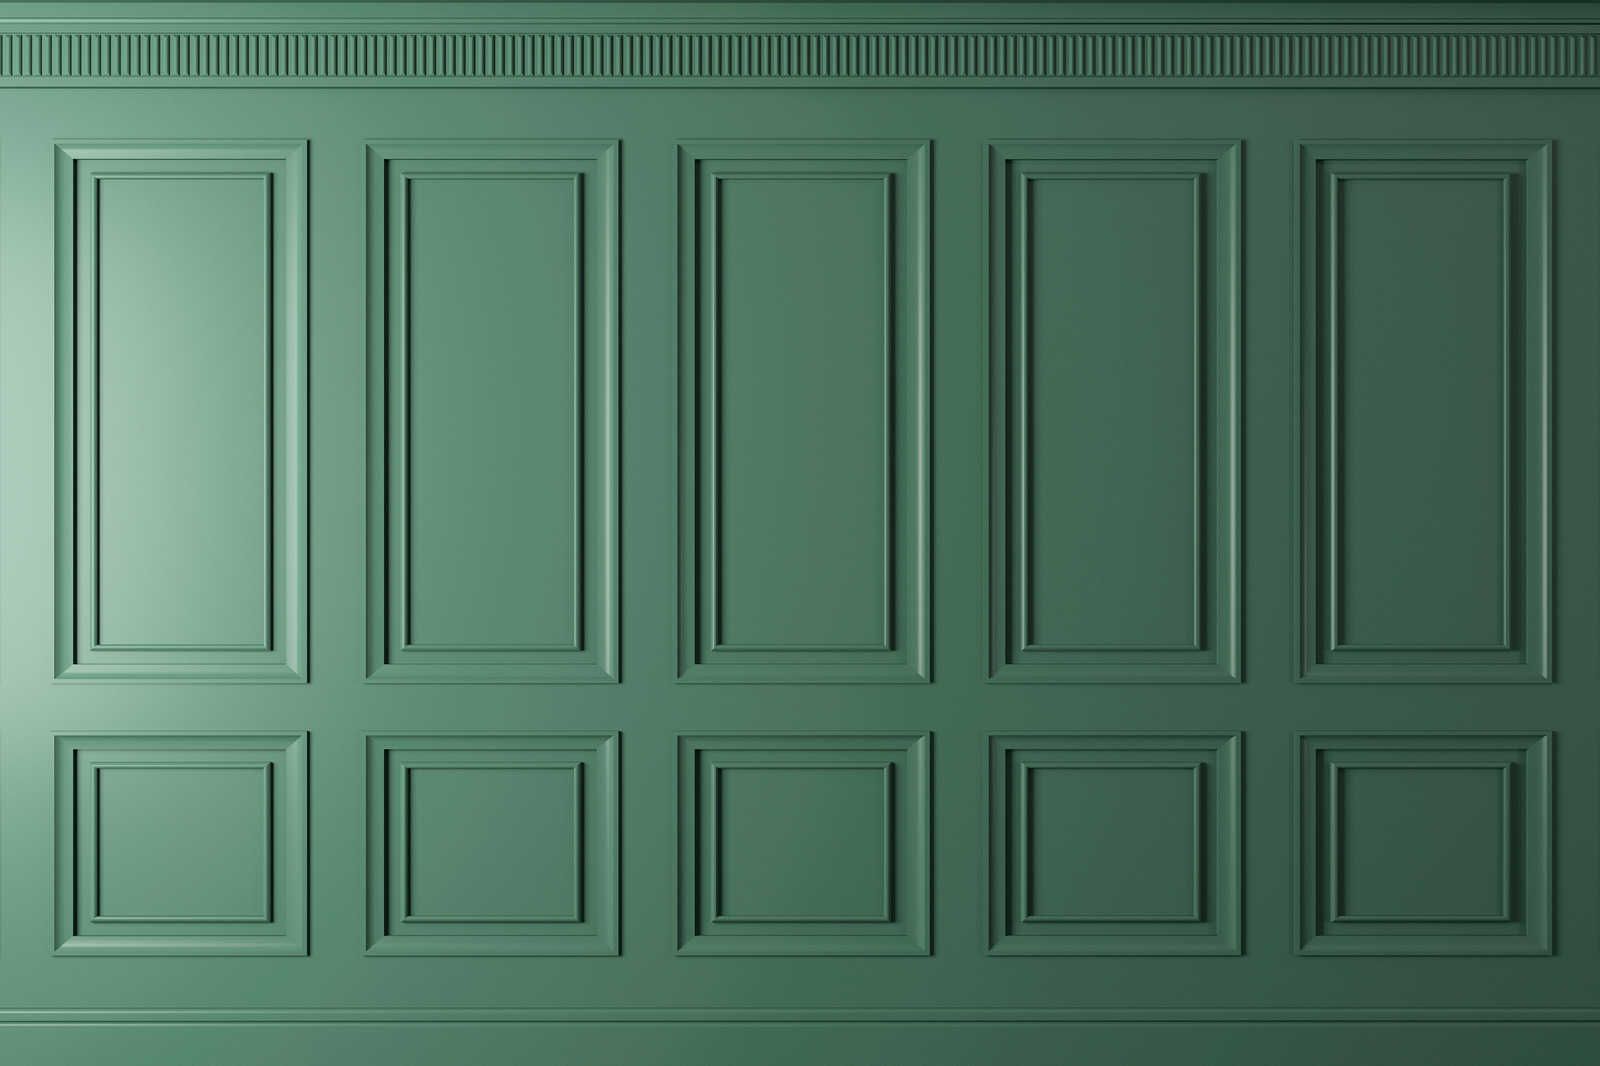             Kensington 1 - 3D toile lambris bois vert sapin - 0,90 m x 0,60 m
        